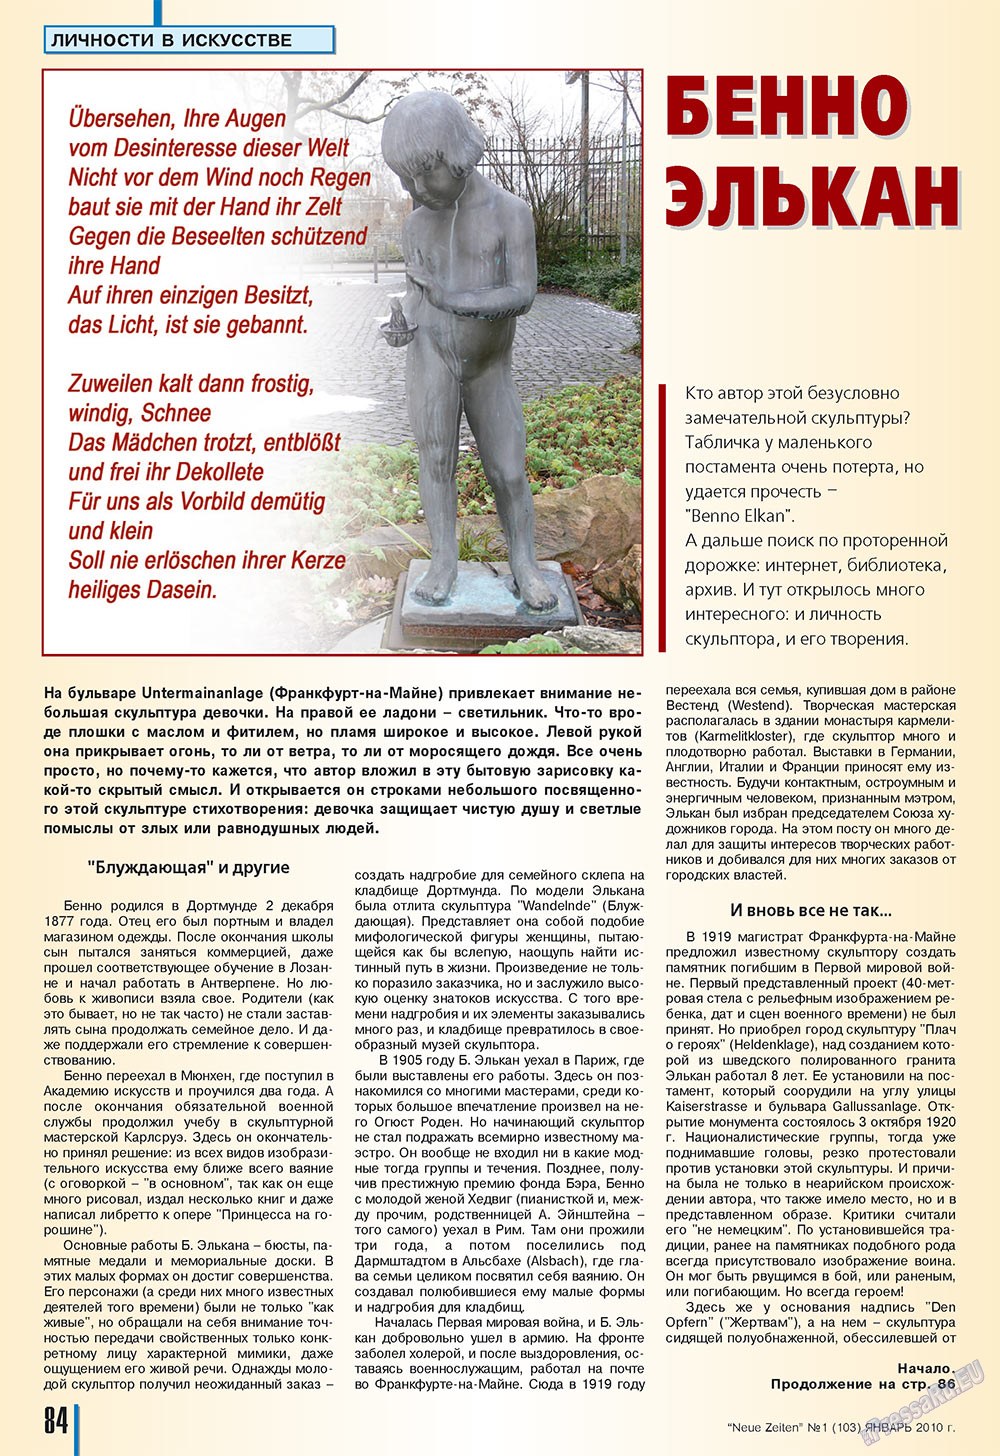 Neue Zeiten (журнал). 2010 год, номер 1, стр. 84